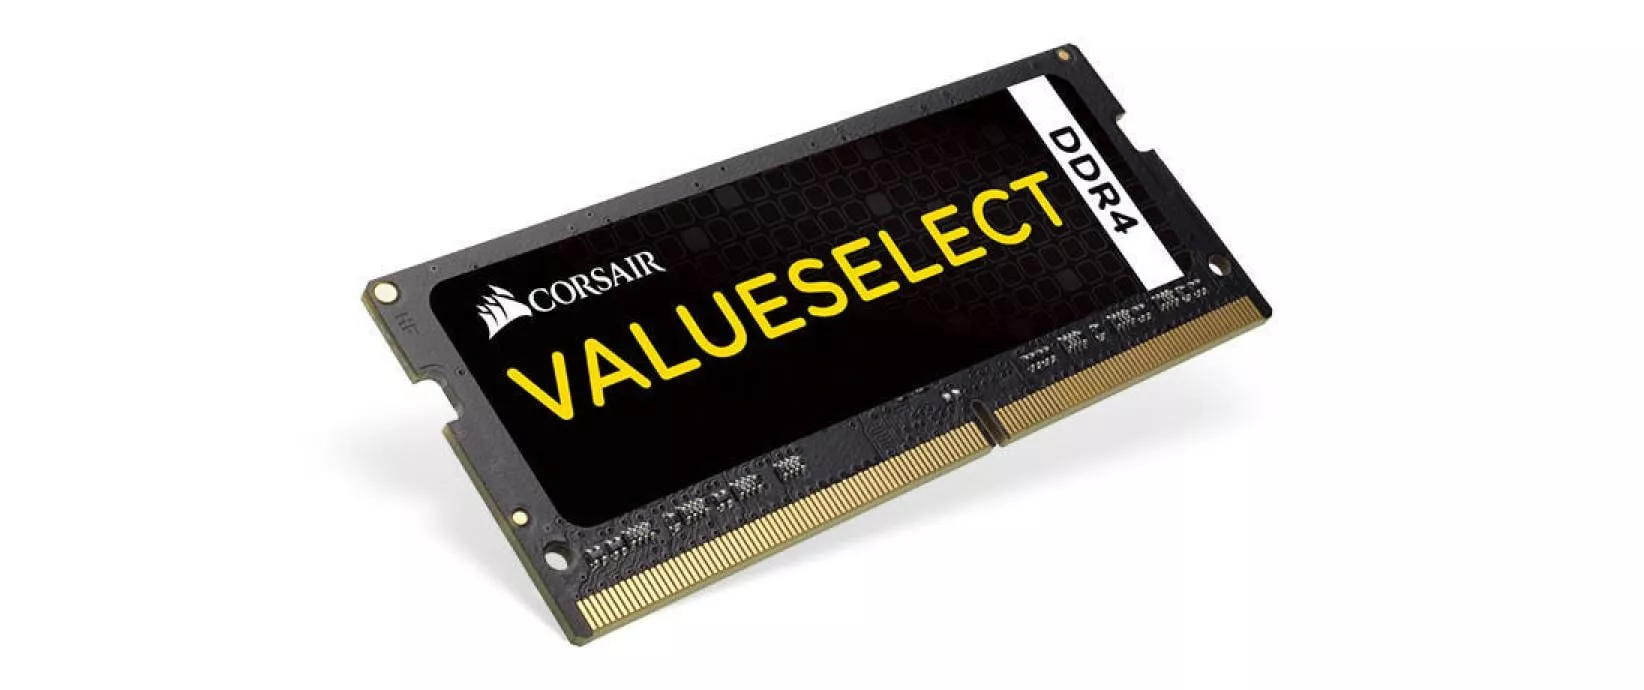 SO-DDR4 RAM ValueSelect 2133 MHz 1x 4 GB